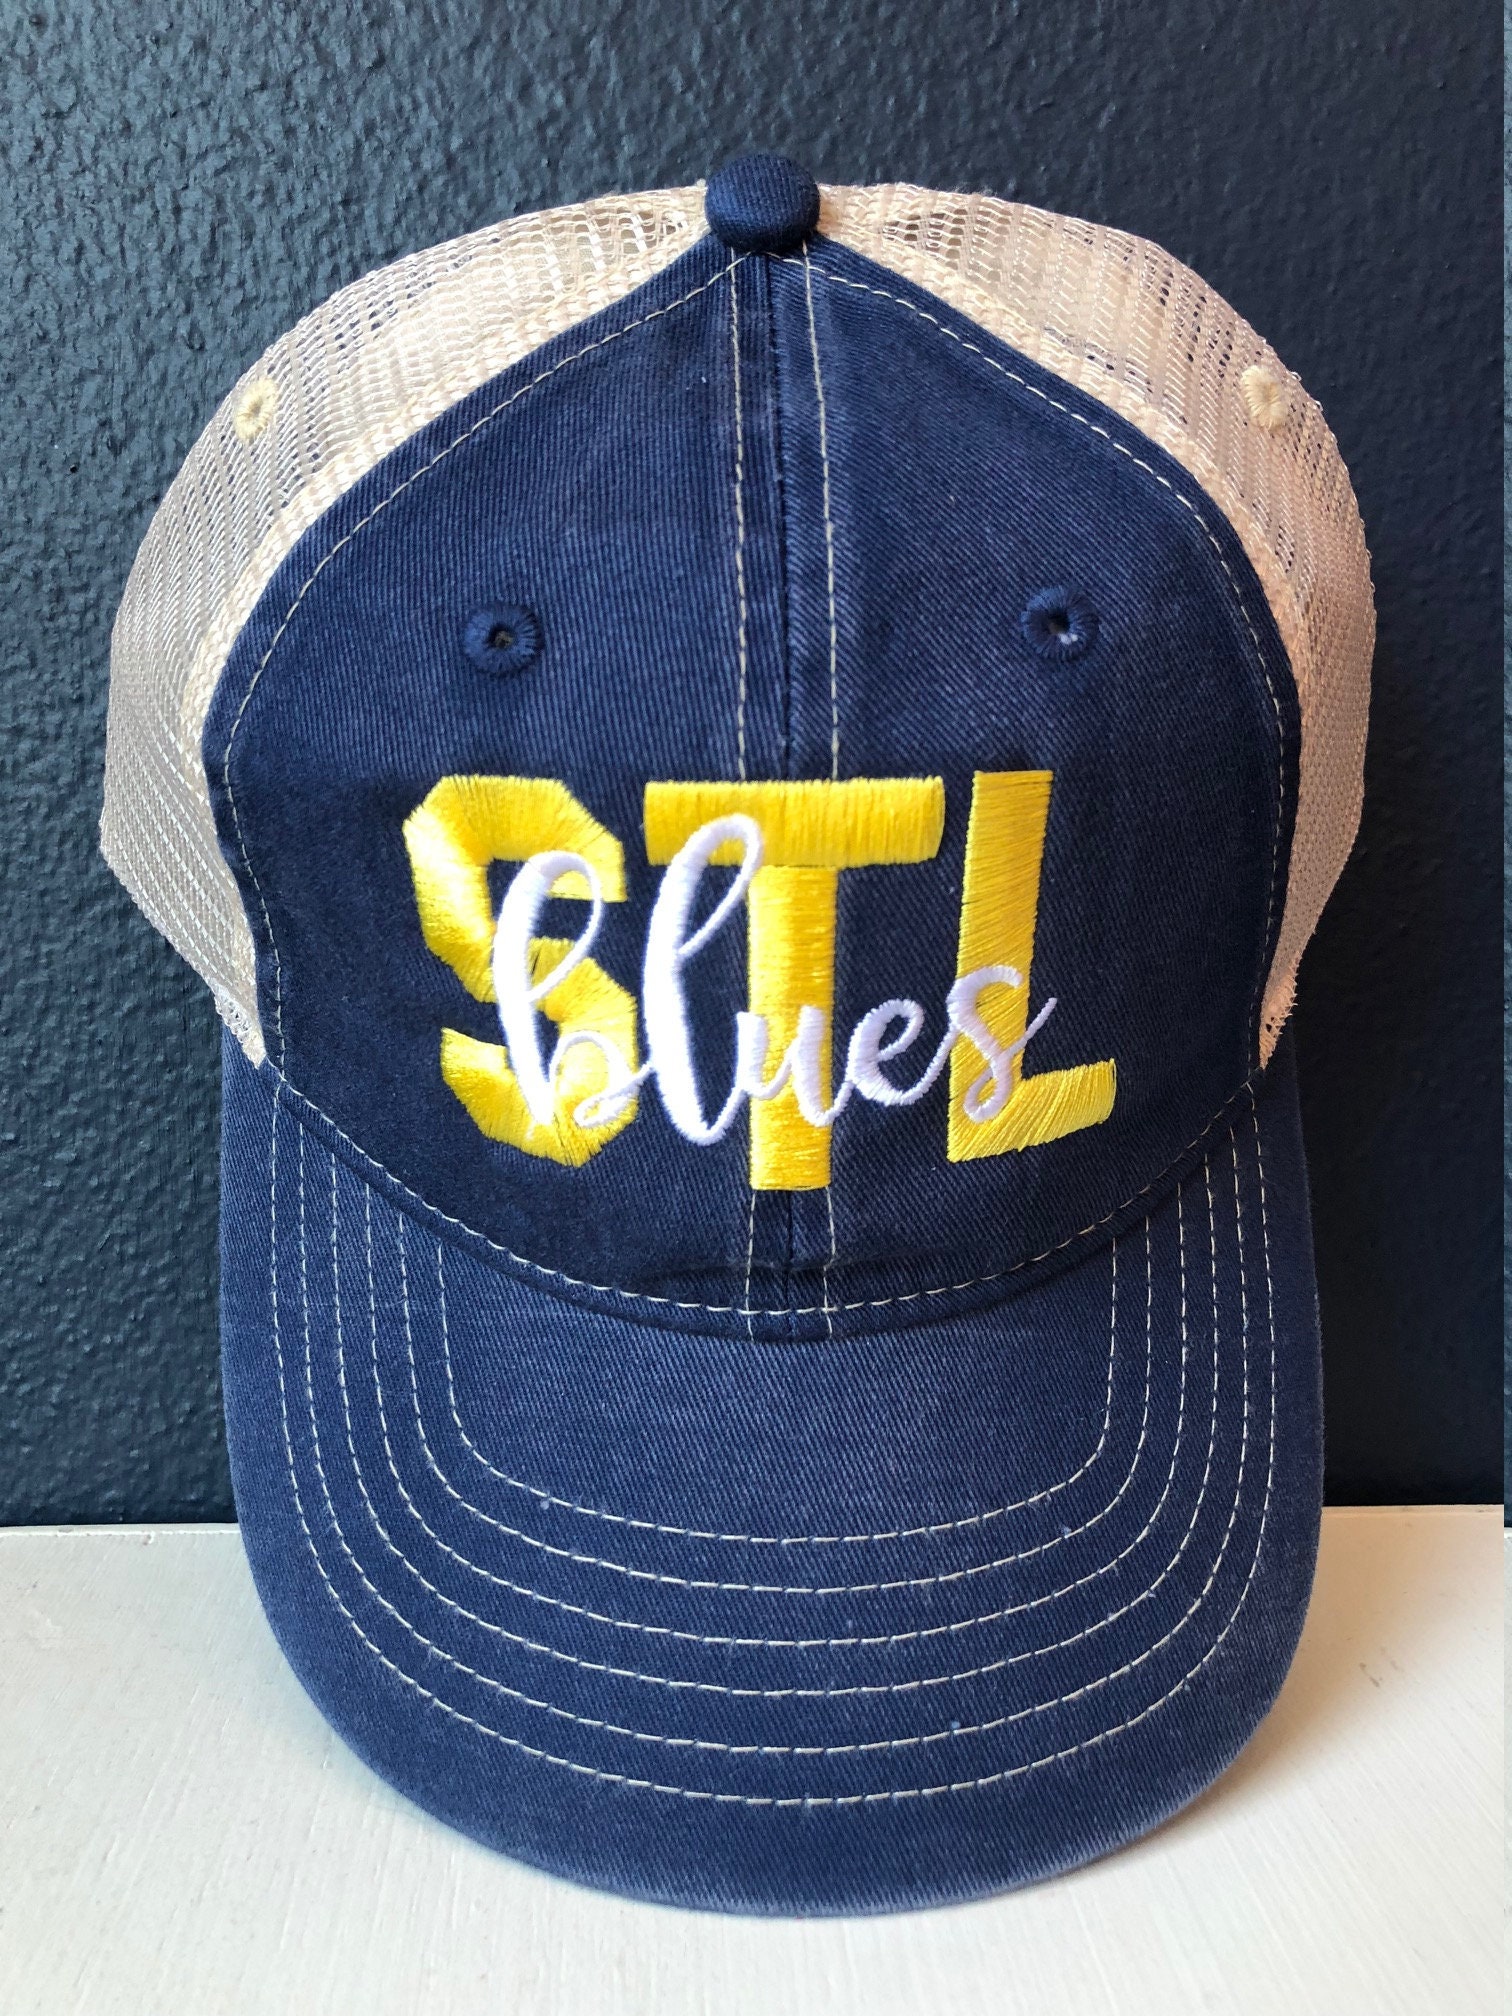 Womens NHL St. Louis Blues Hats - Accessories